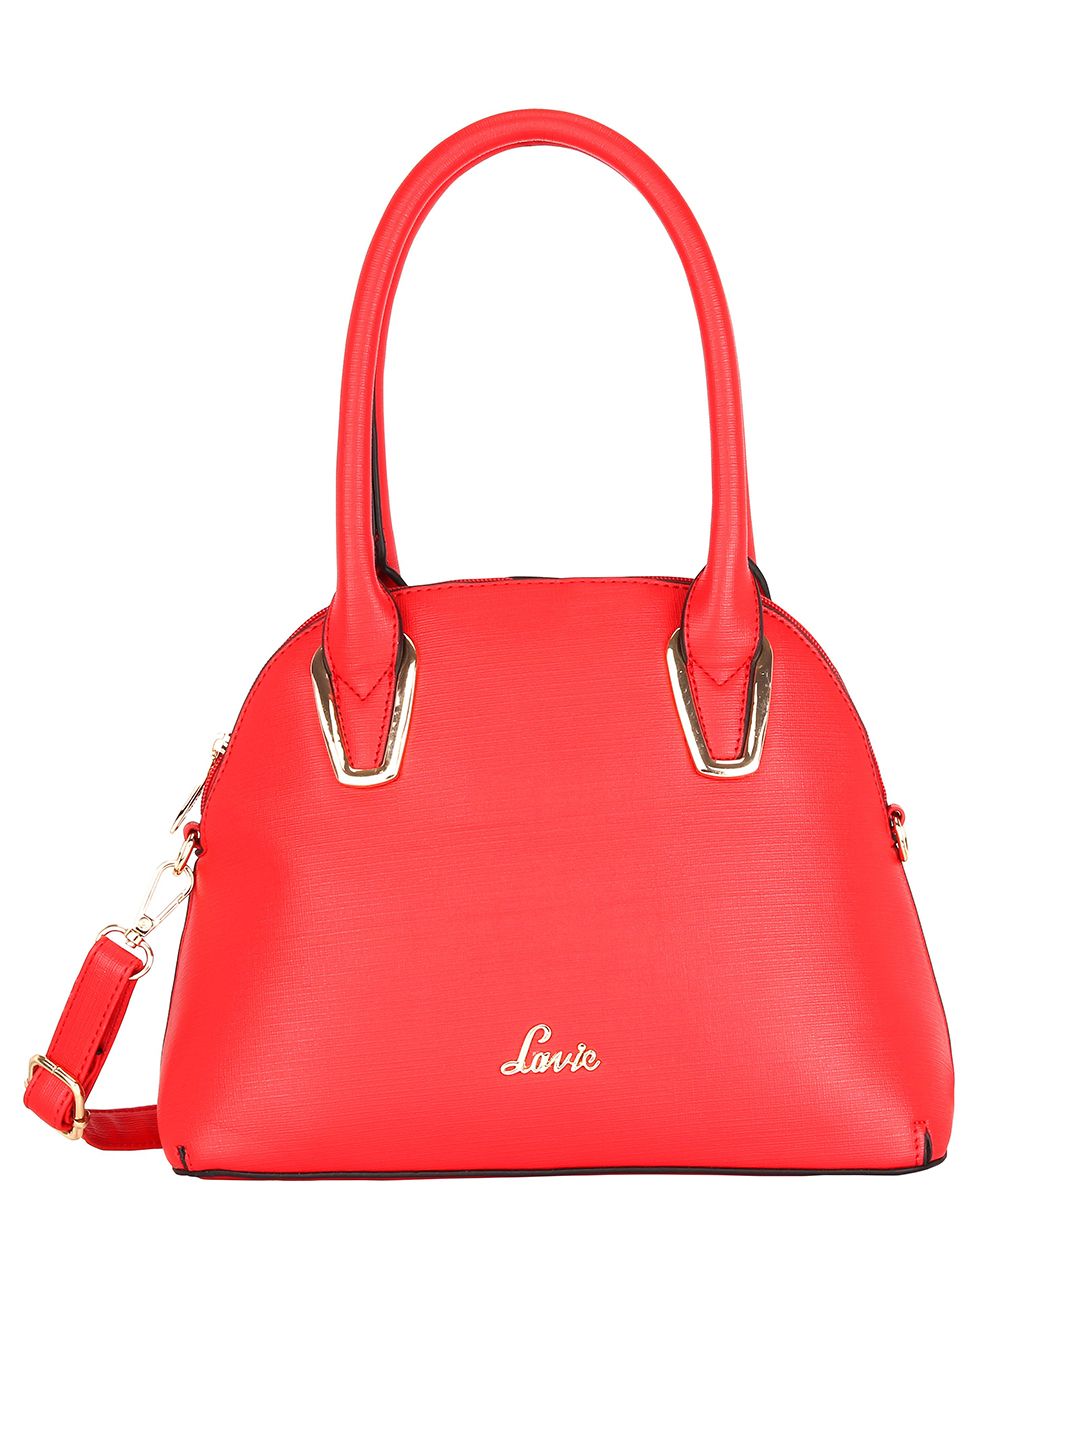 Lavie Red Solid Shoulder Bag Price in India